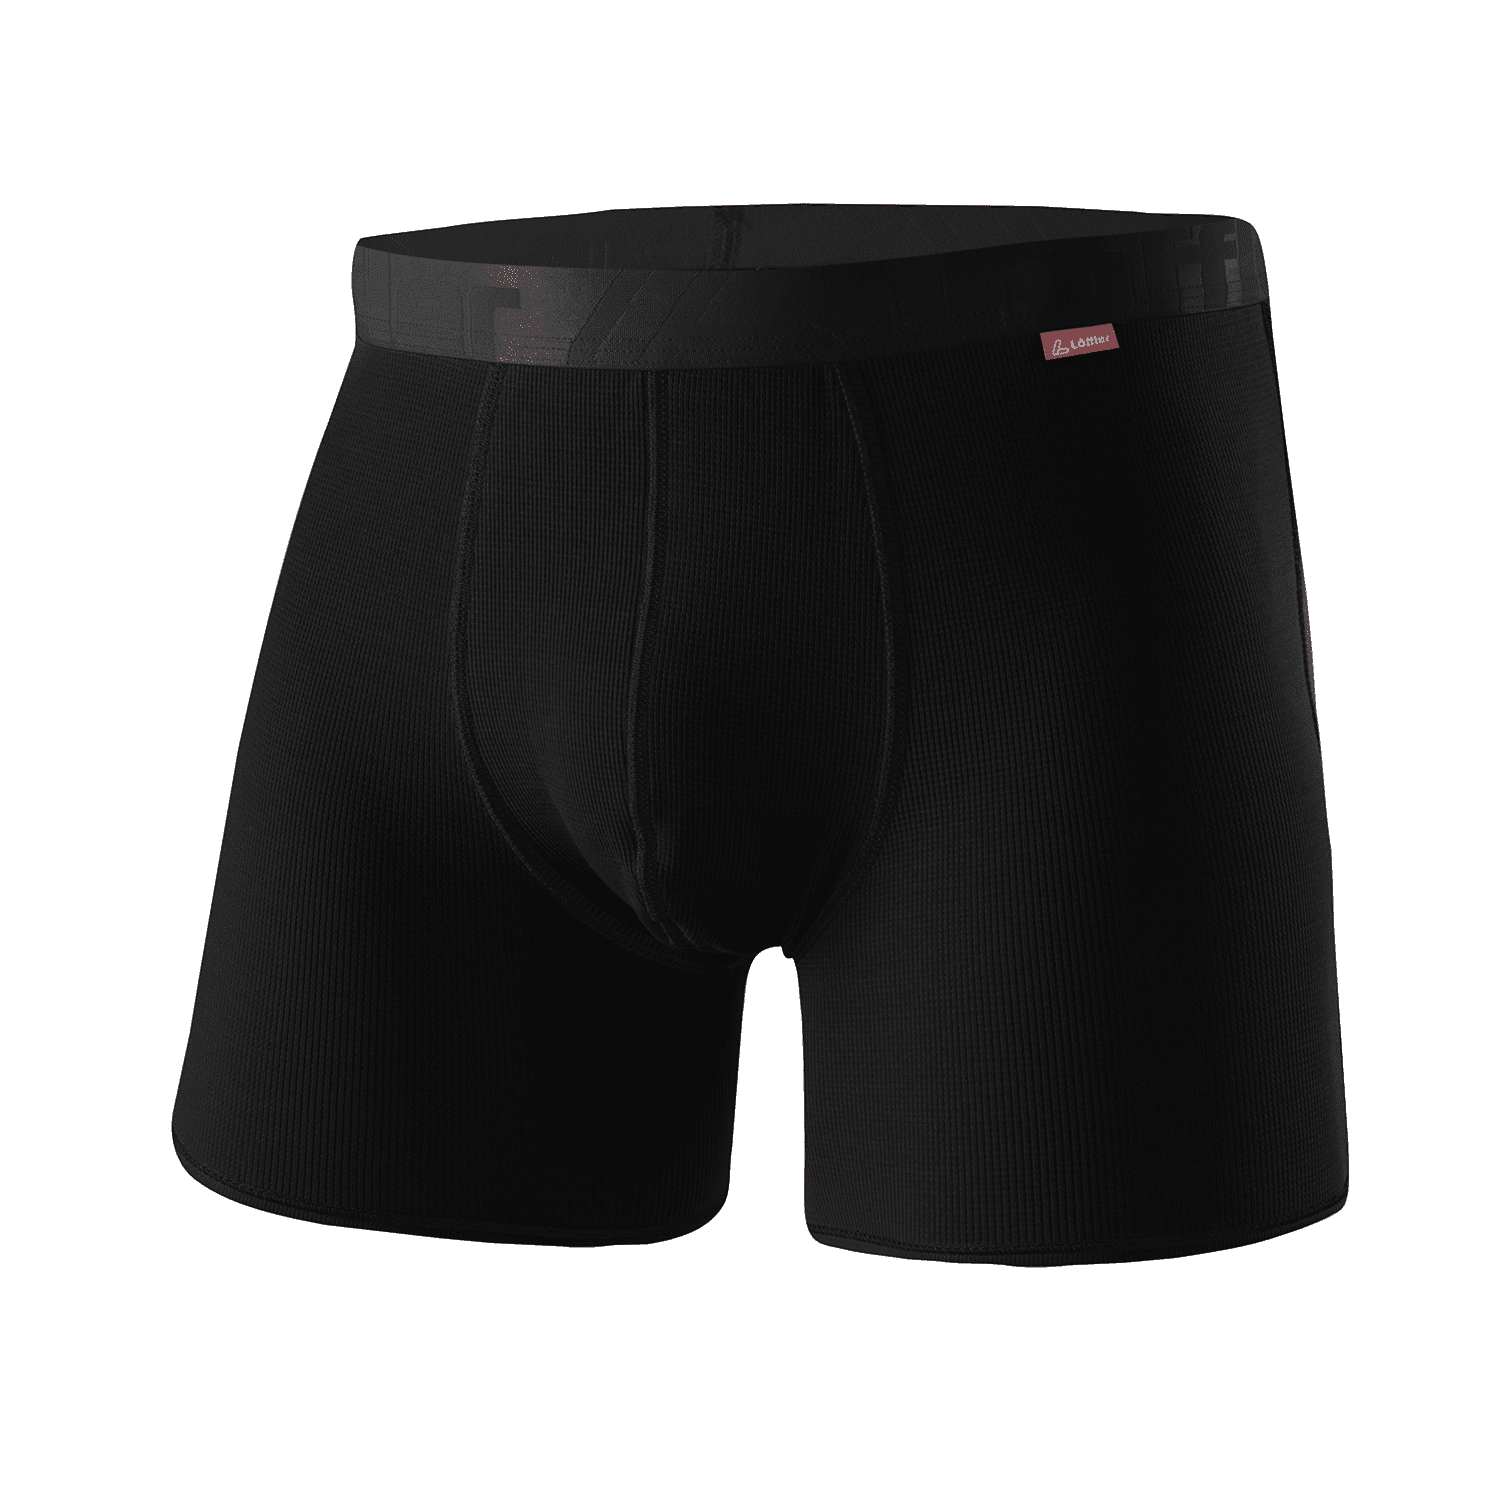 Löffler Boxershorts Transtex Light - Underwear - Men's